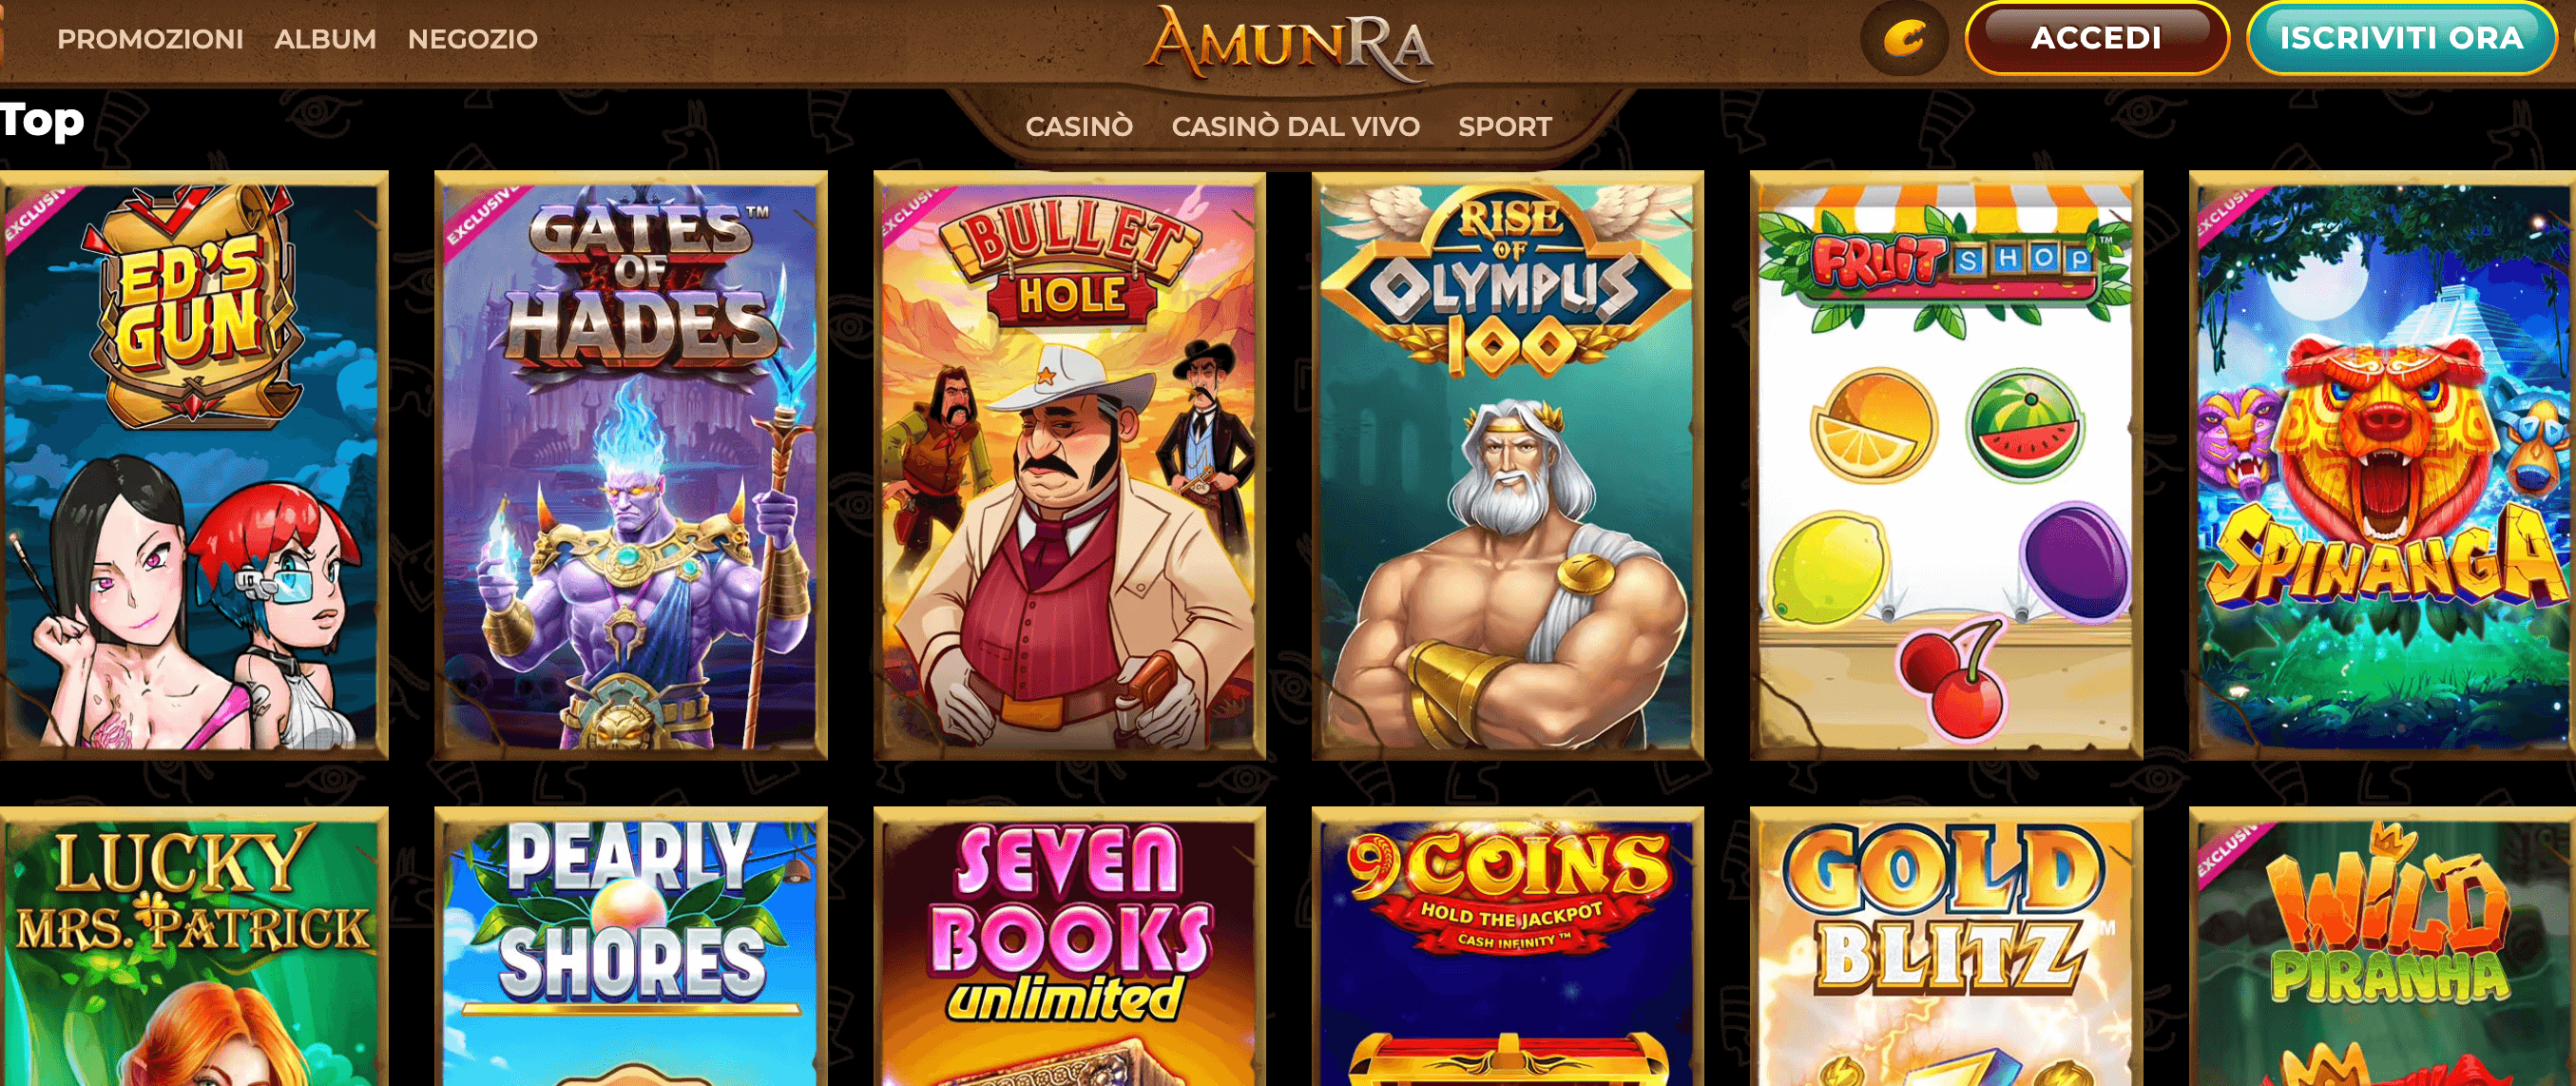 AmunRa Casino Slot